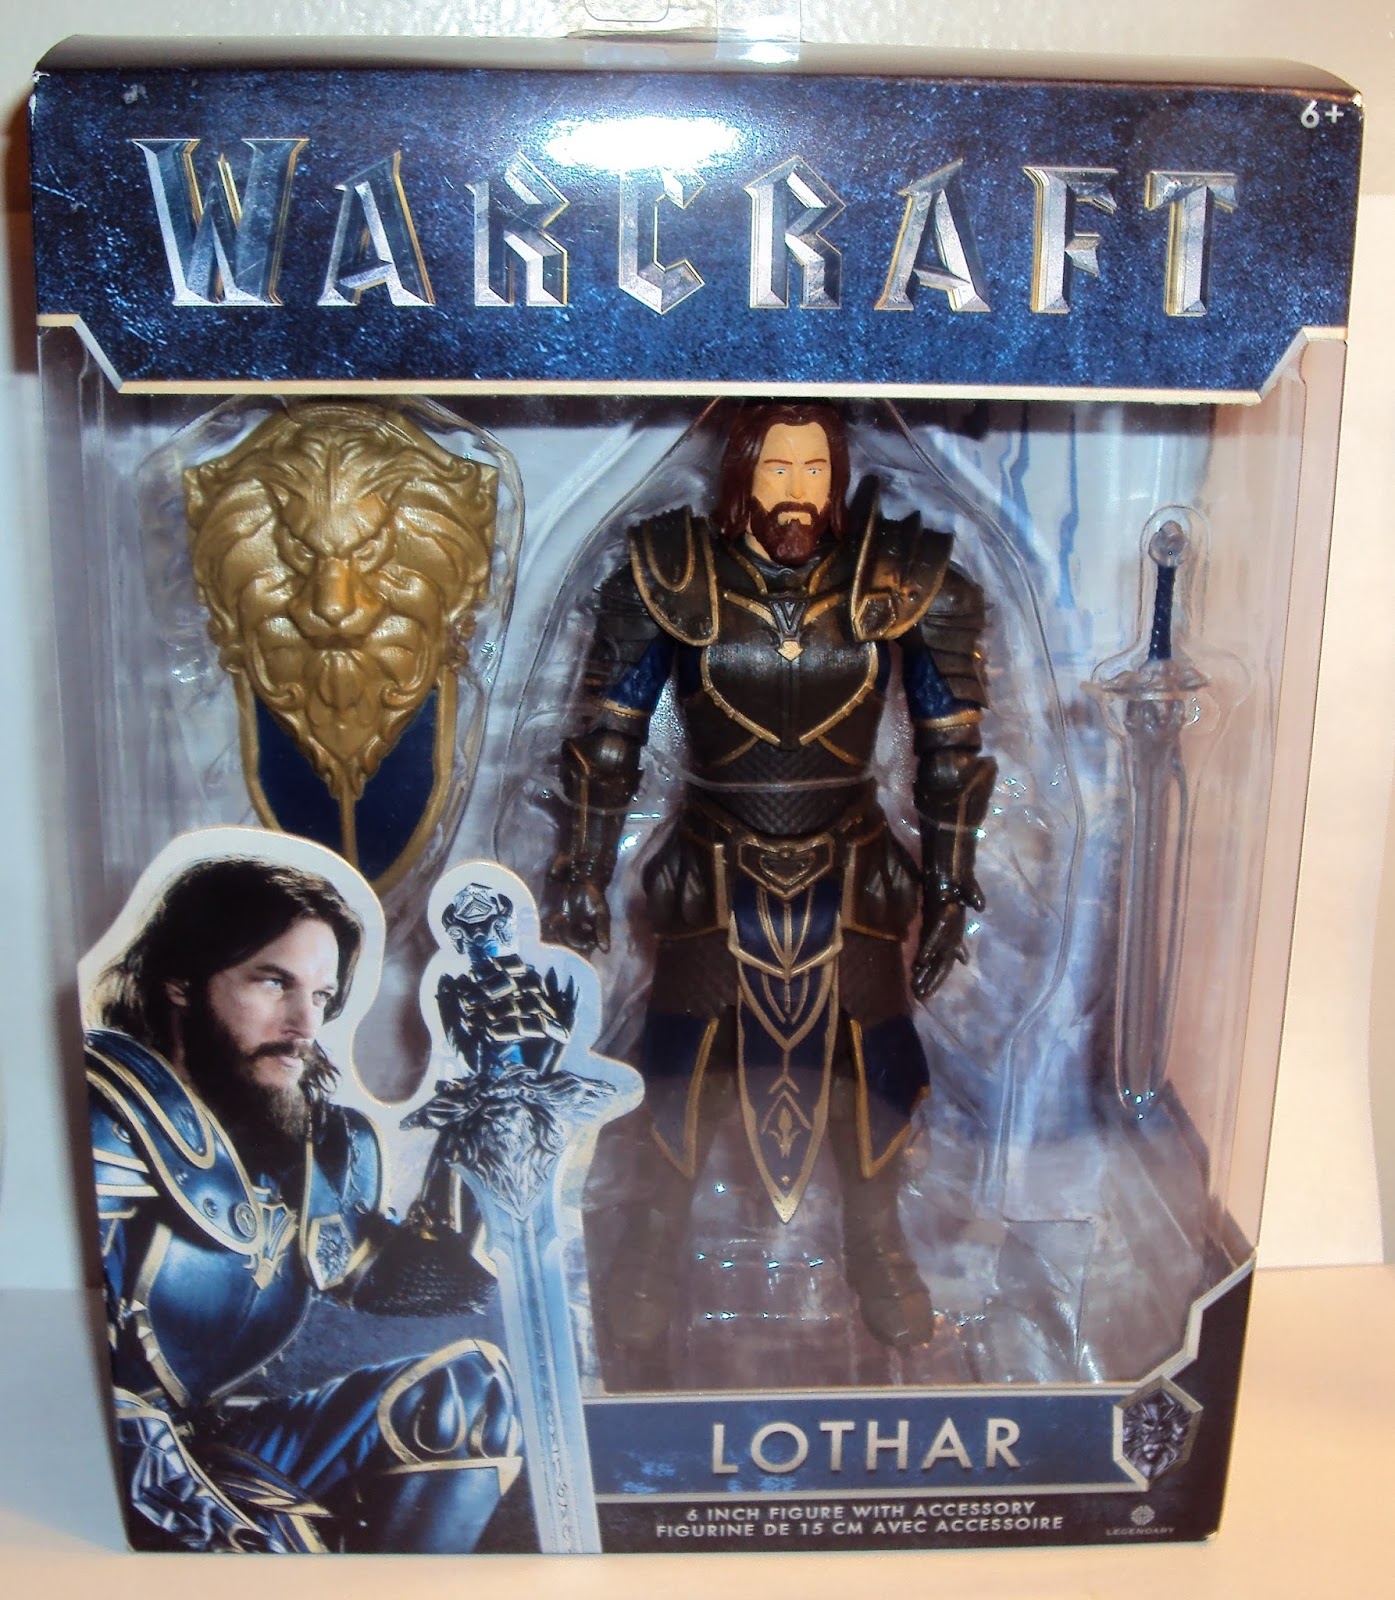 Jakks Warcraft Movie 6 Inch 15 Cm Action Figure Lothar Boxed for sale online 